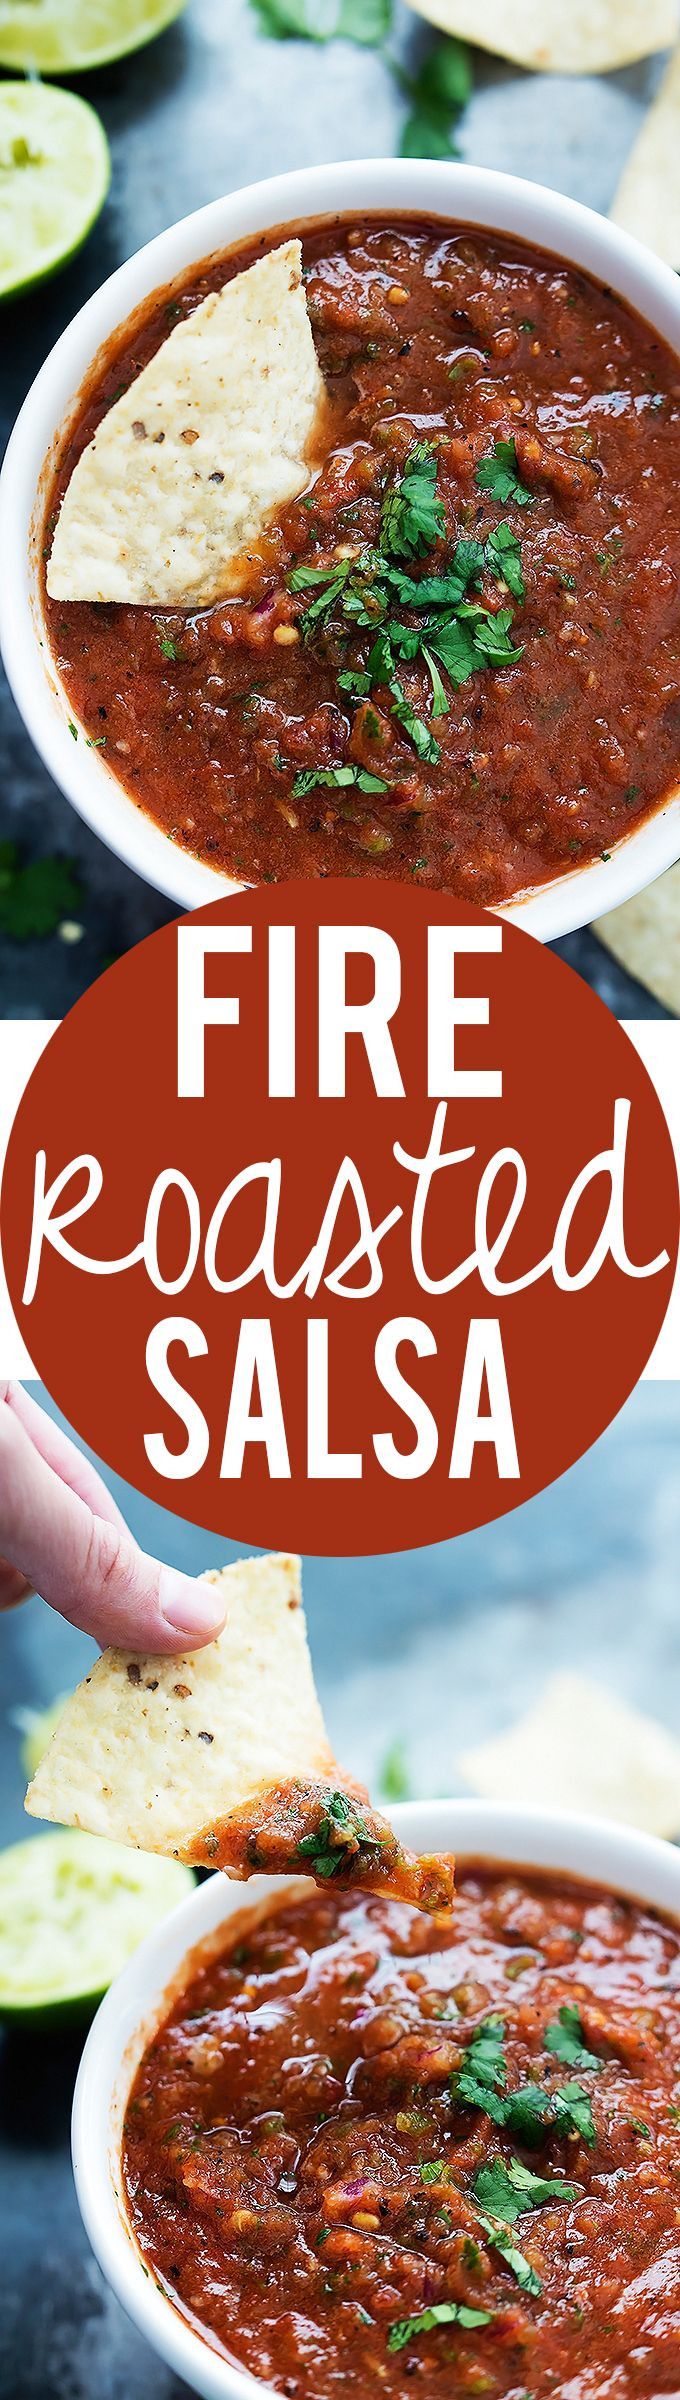 Fire Roasted Salsa Recipe
 Fire Roasted Salsa a no fuss 5 minute blender recipe